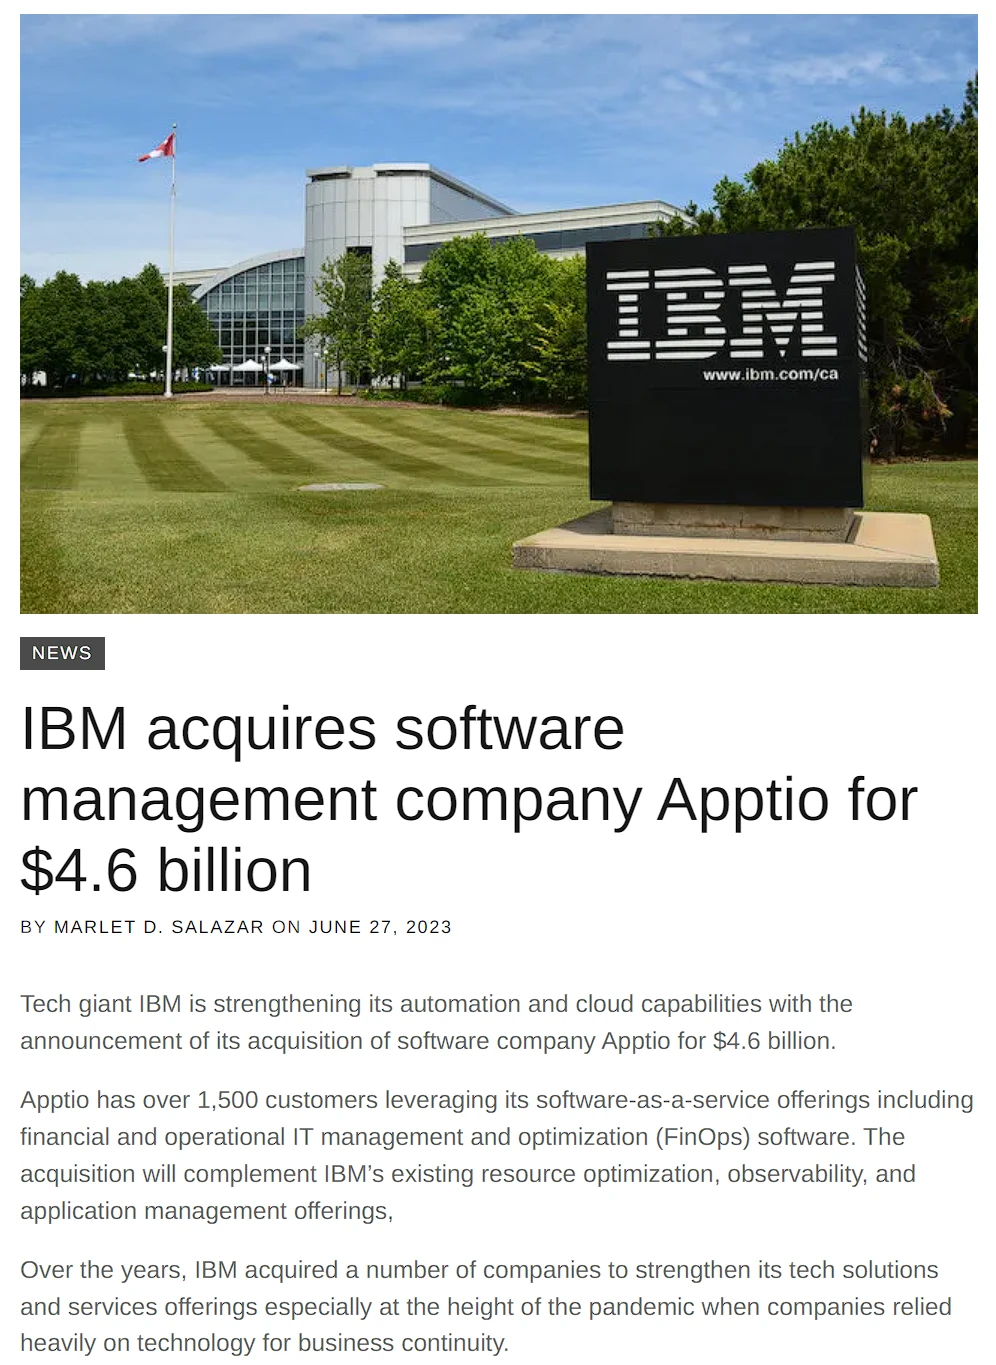 IBM宣布收购FinOps软件巨头Apptio